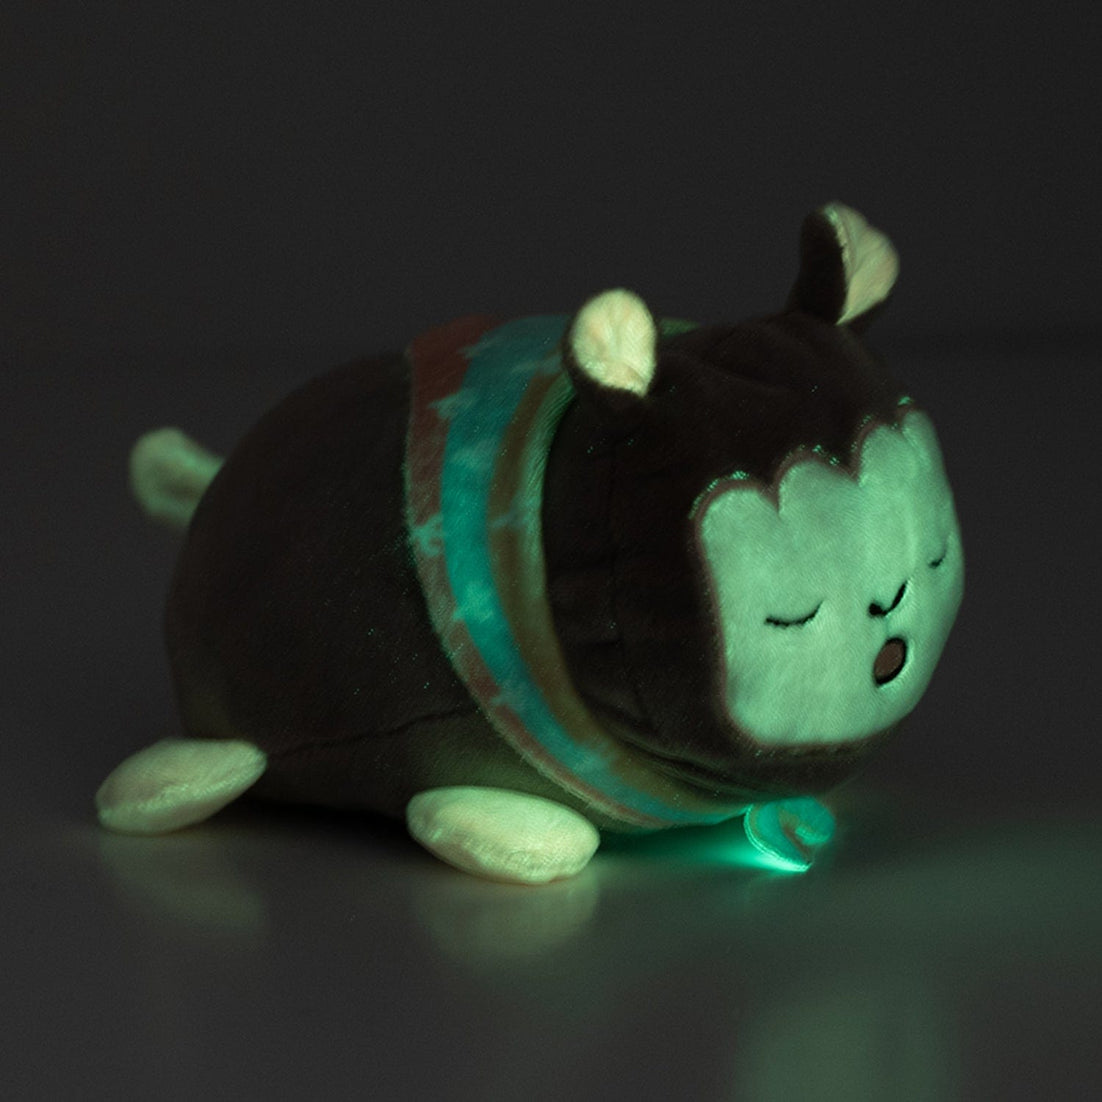 Adora Squishy Snuggle & Glow Reversible Plushie Llama Pet